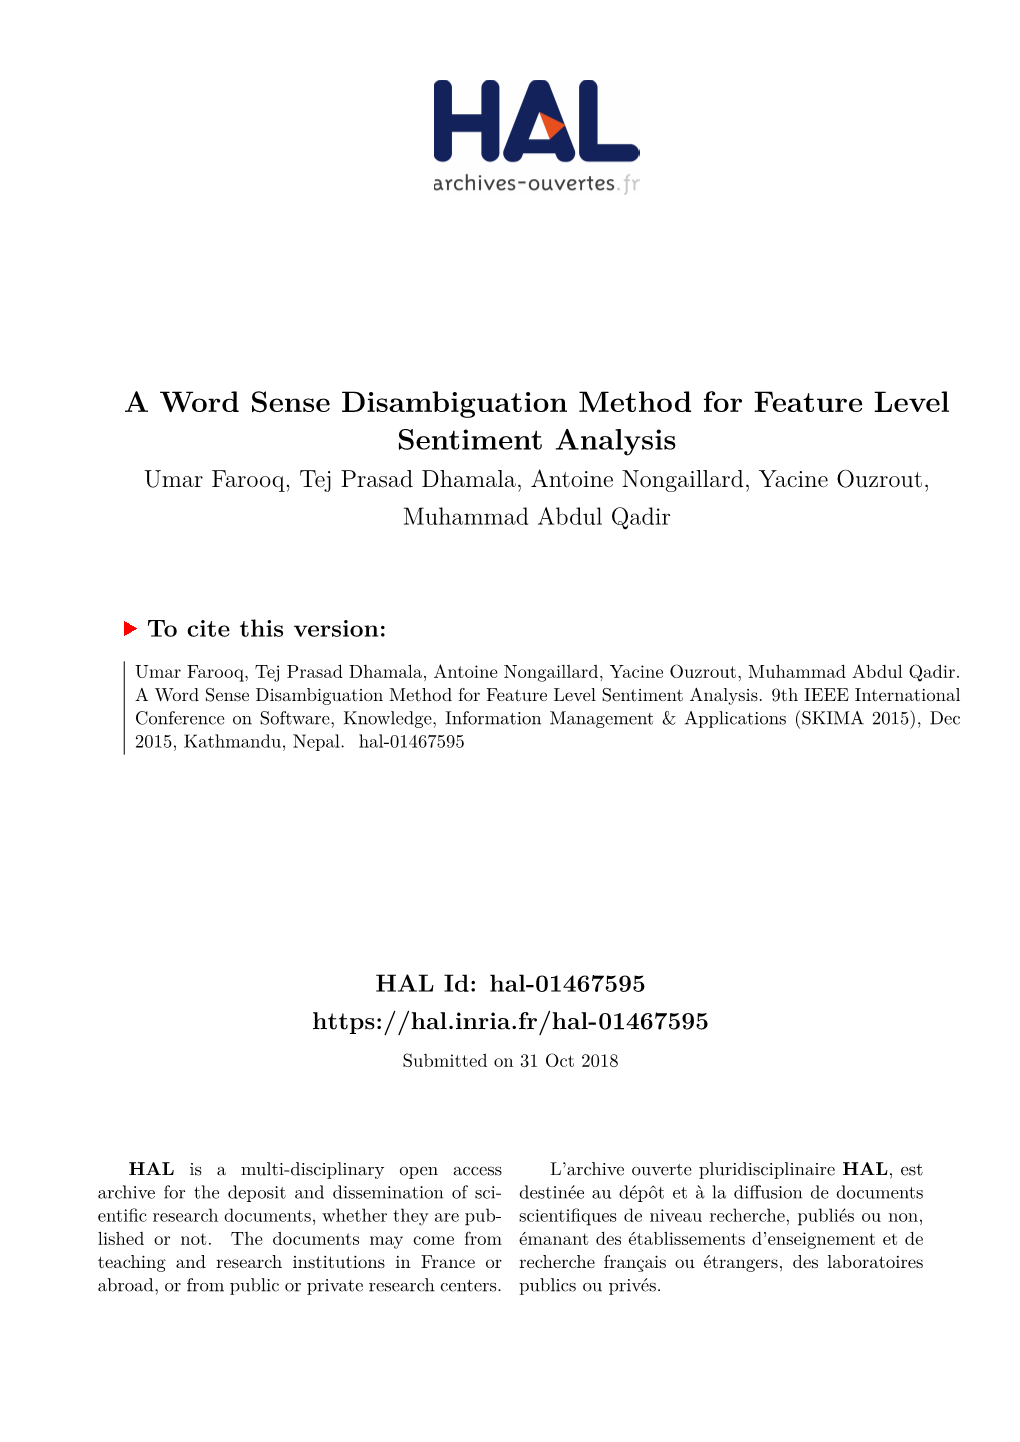 A Word Sense Disambiguation Method for Feature Level Sentiment Analysis Umar Farooq, Tej Prasad Dhamala, Antoine Nongaillard, Yacine Ouzrout, Muhammad Abdul Qadir